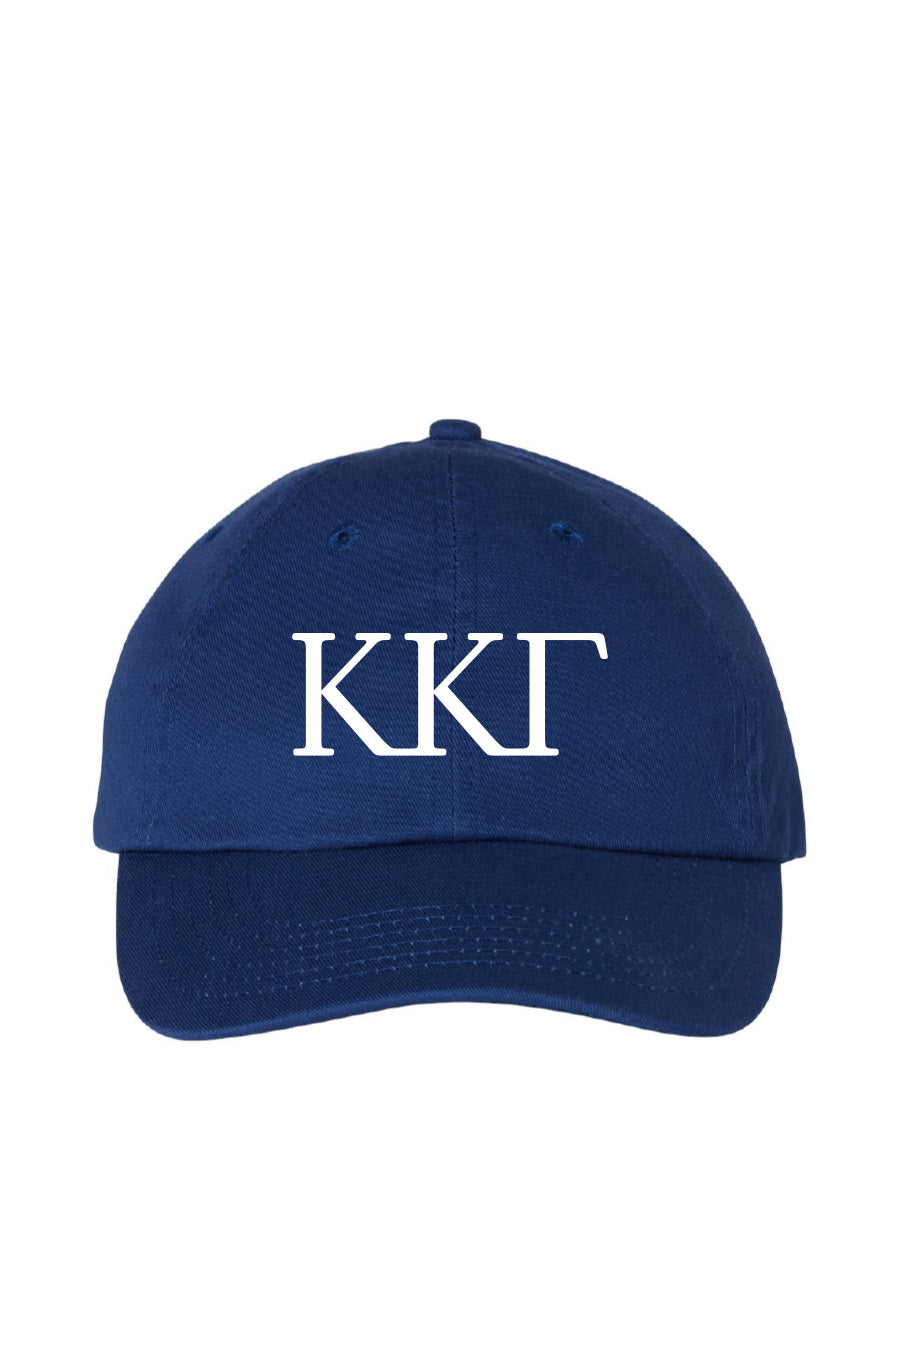 KKG Classic Hat